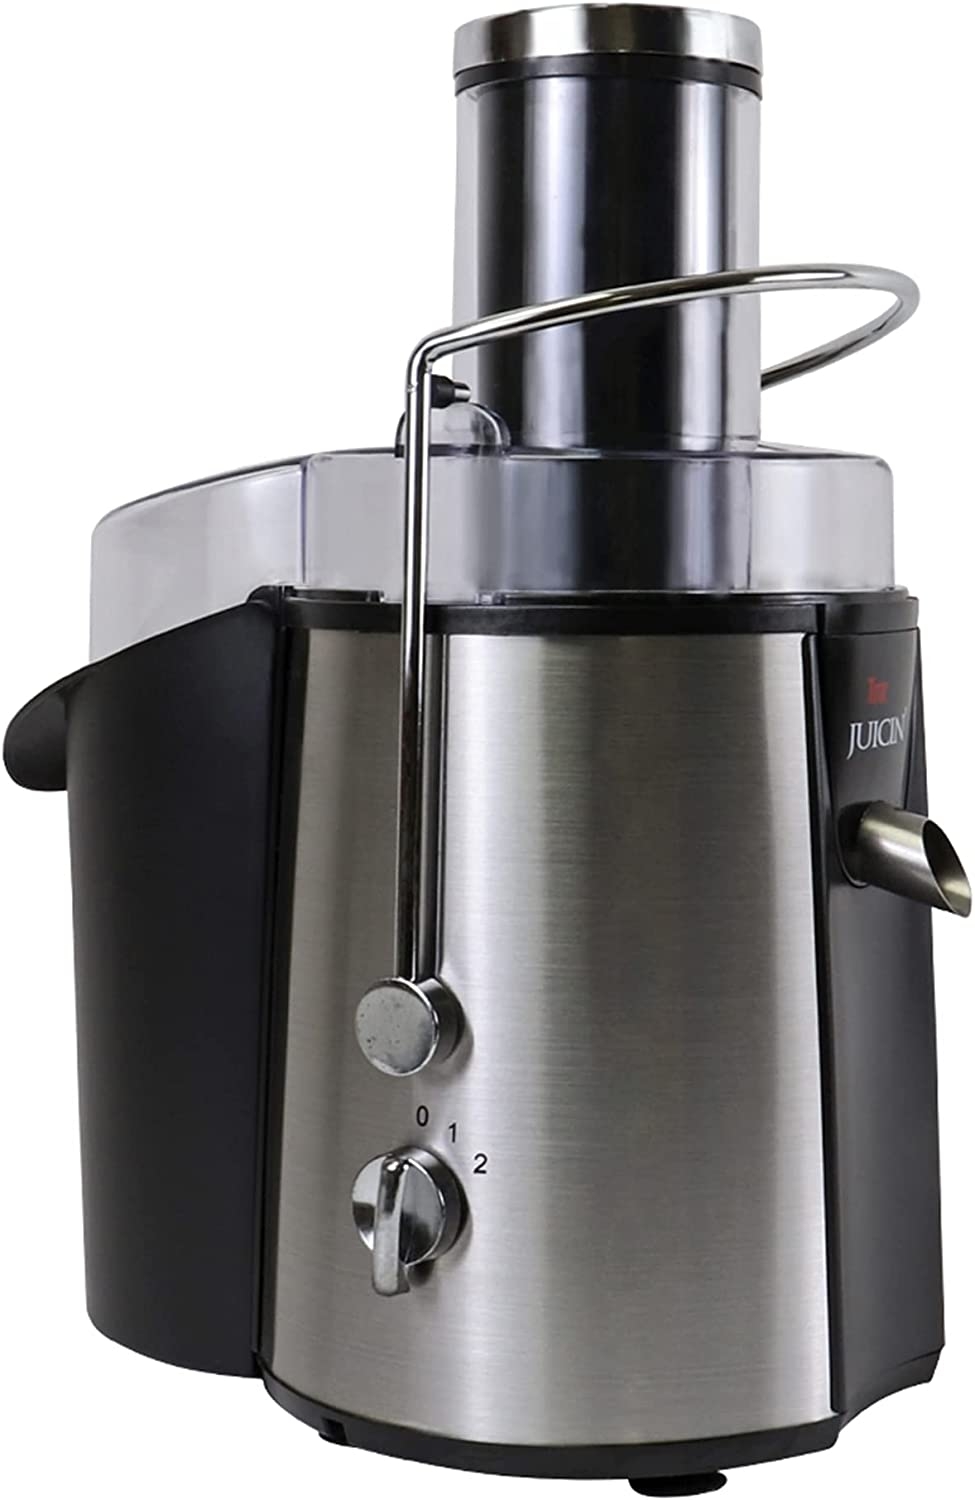 Koolatron KMJ-01 Total Chef Jucin’ Power Juicer, Stainless Steel Import To Shop ×Product customization General Description